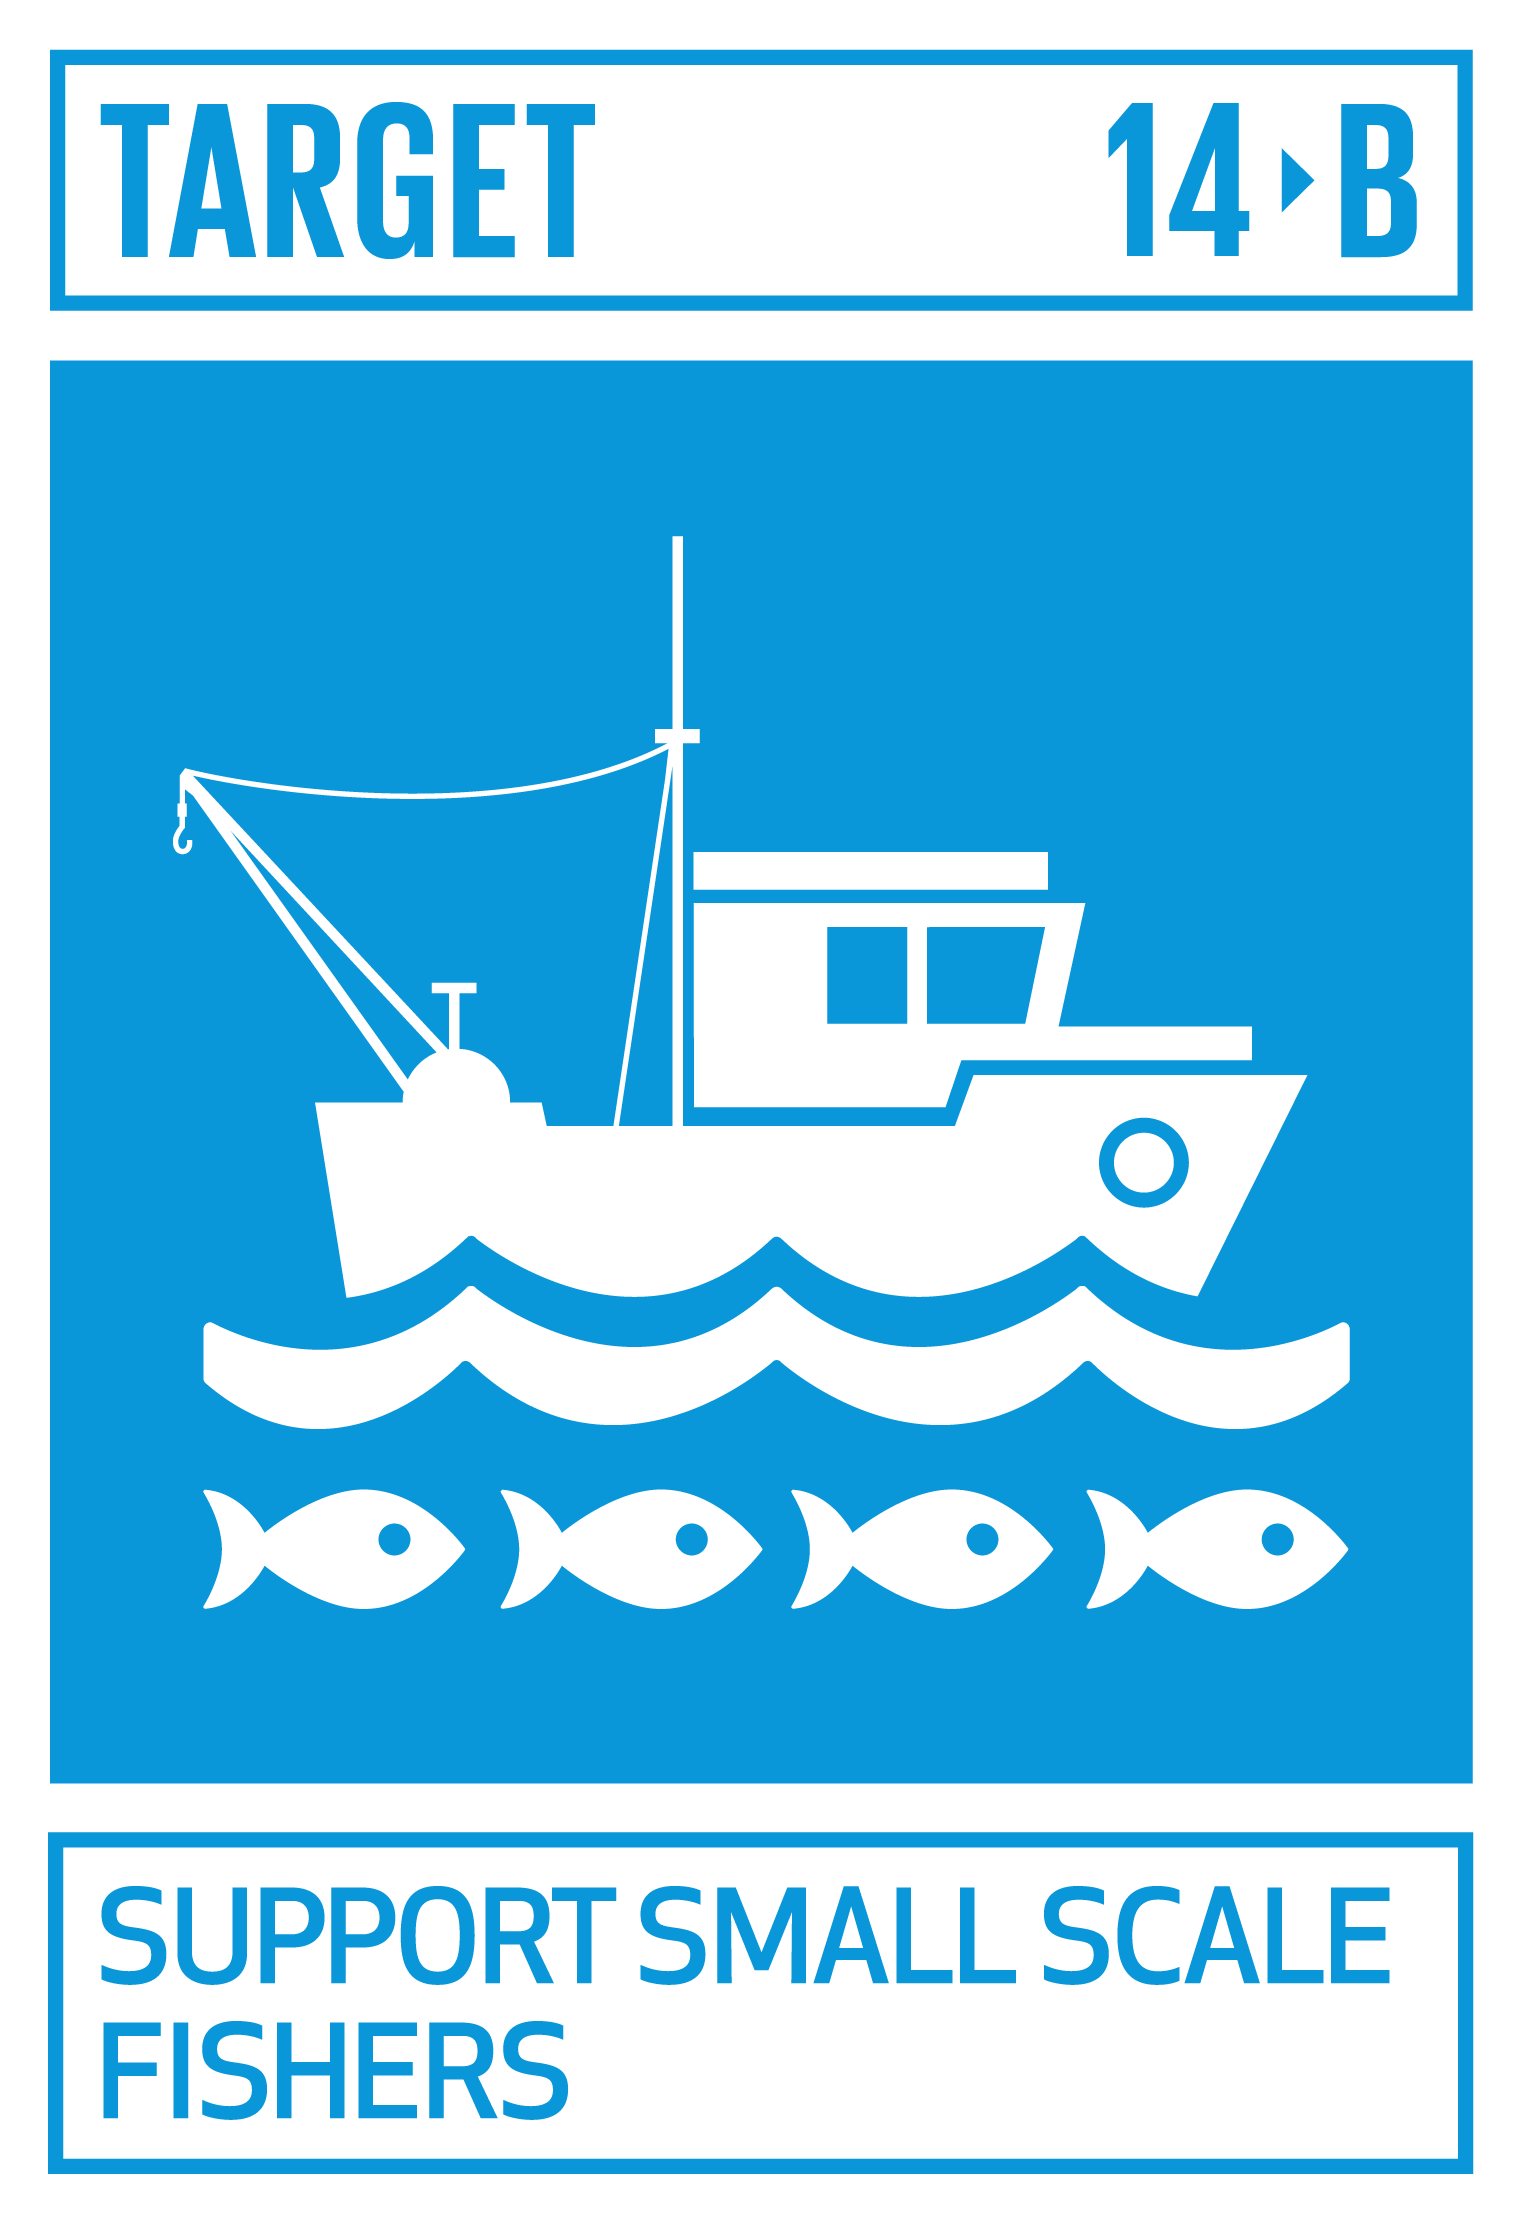 Goal,target,永續發展目標SDGs14,目標14.B支持小型漁民